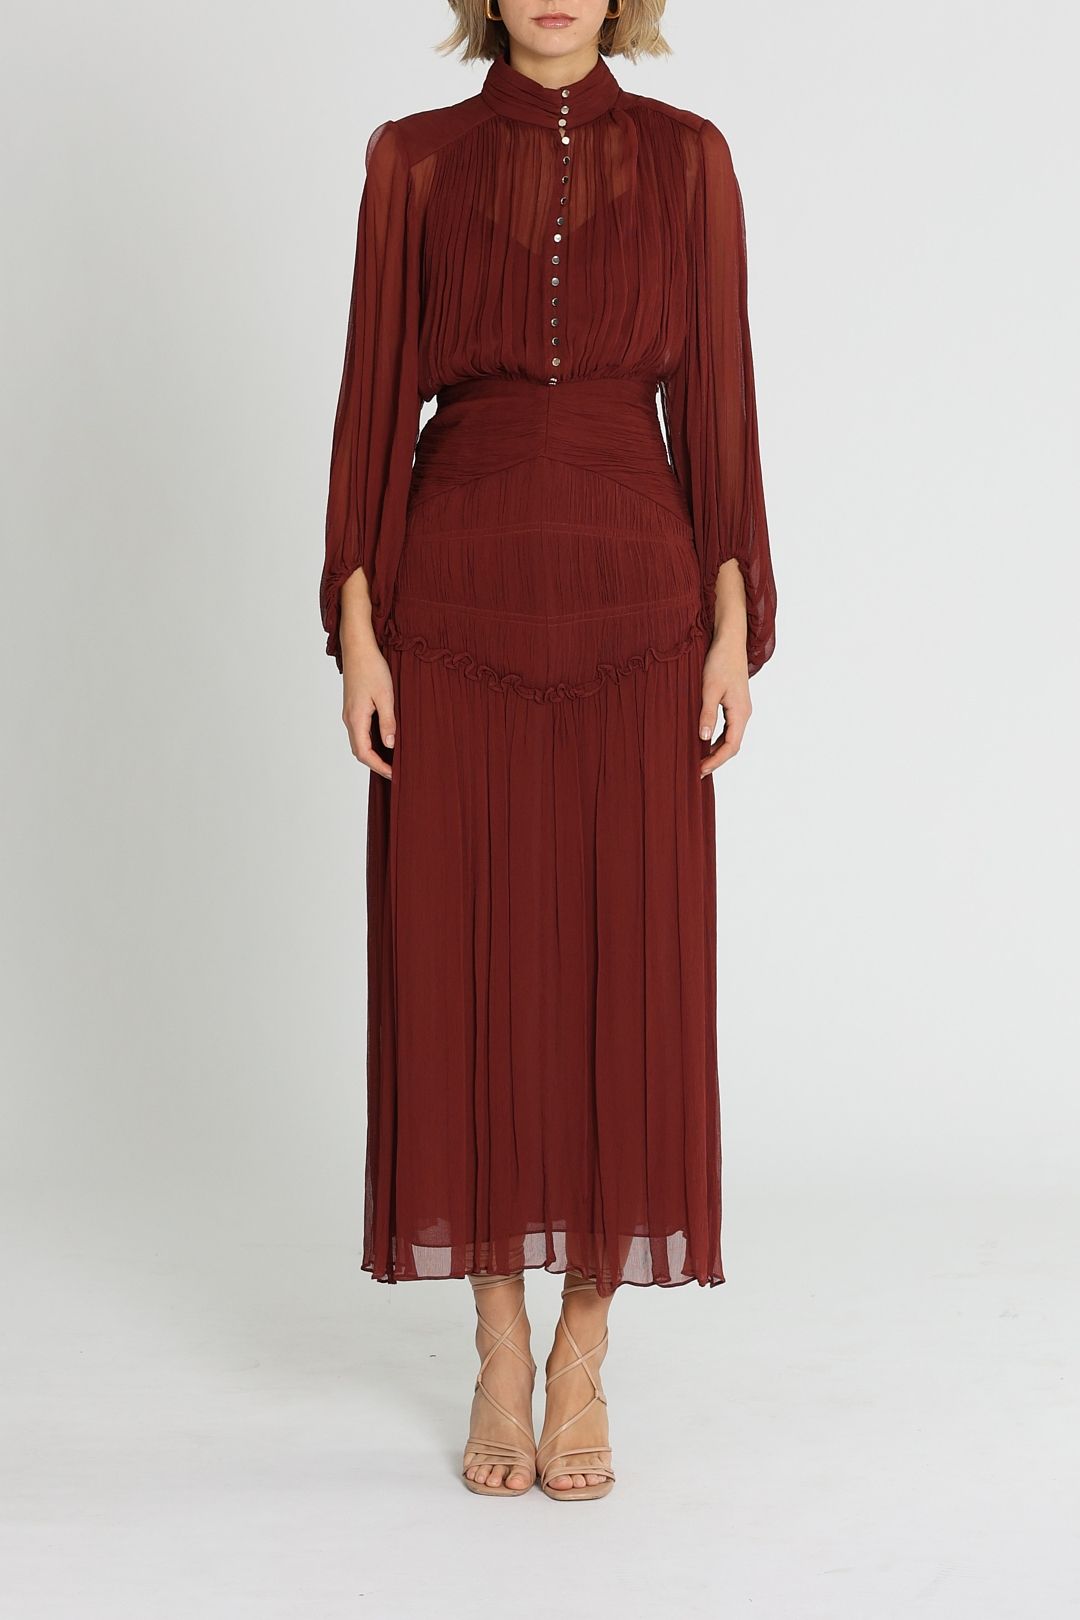 Hire Safira Button Up Ruched Midi Dress in Sangria | Shona Joy | GlamCorner